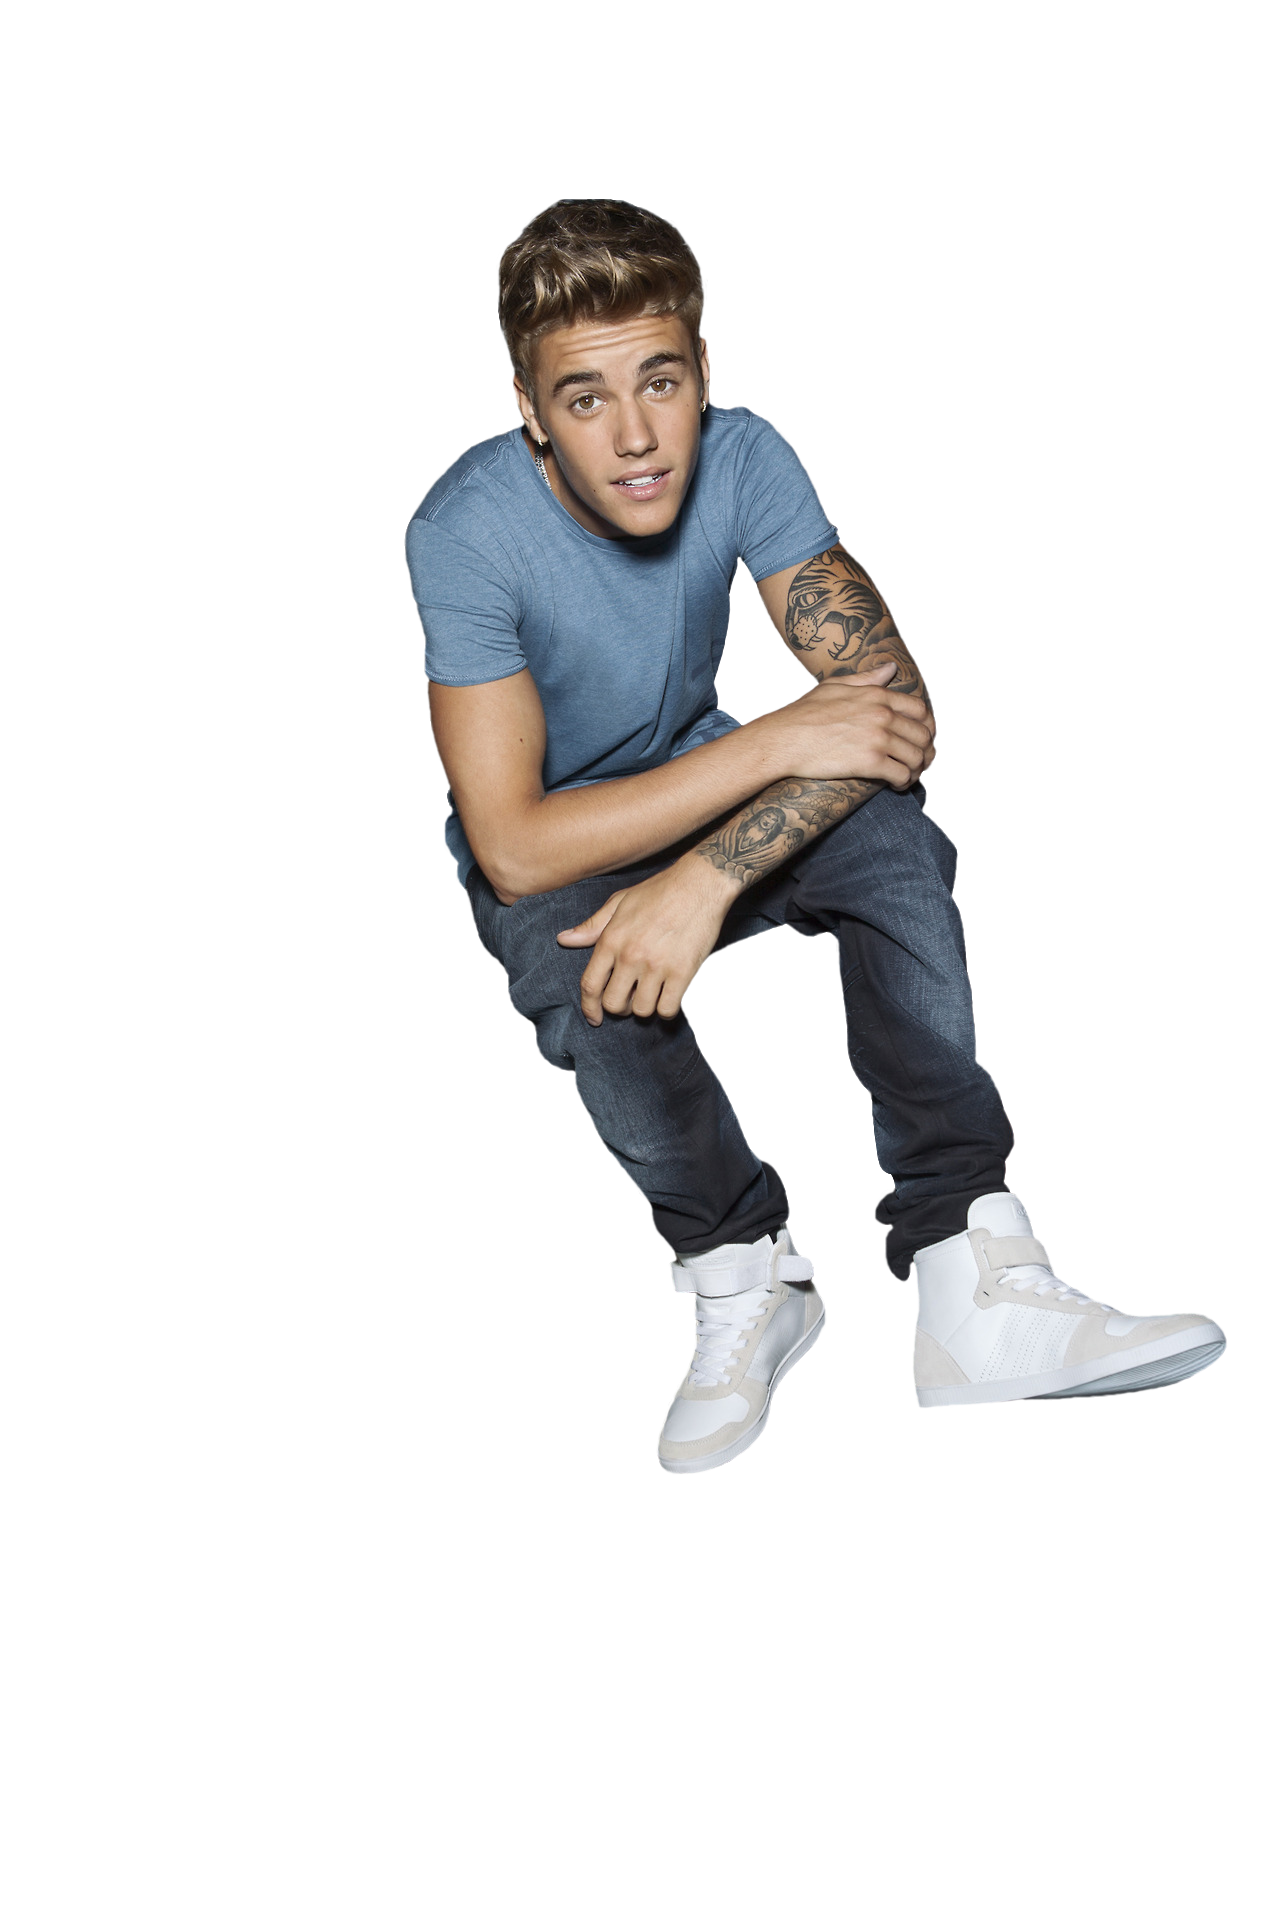 Justin Bieber Sitting